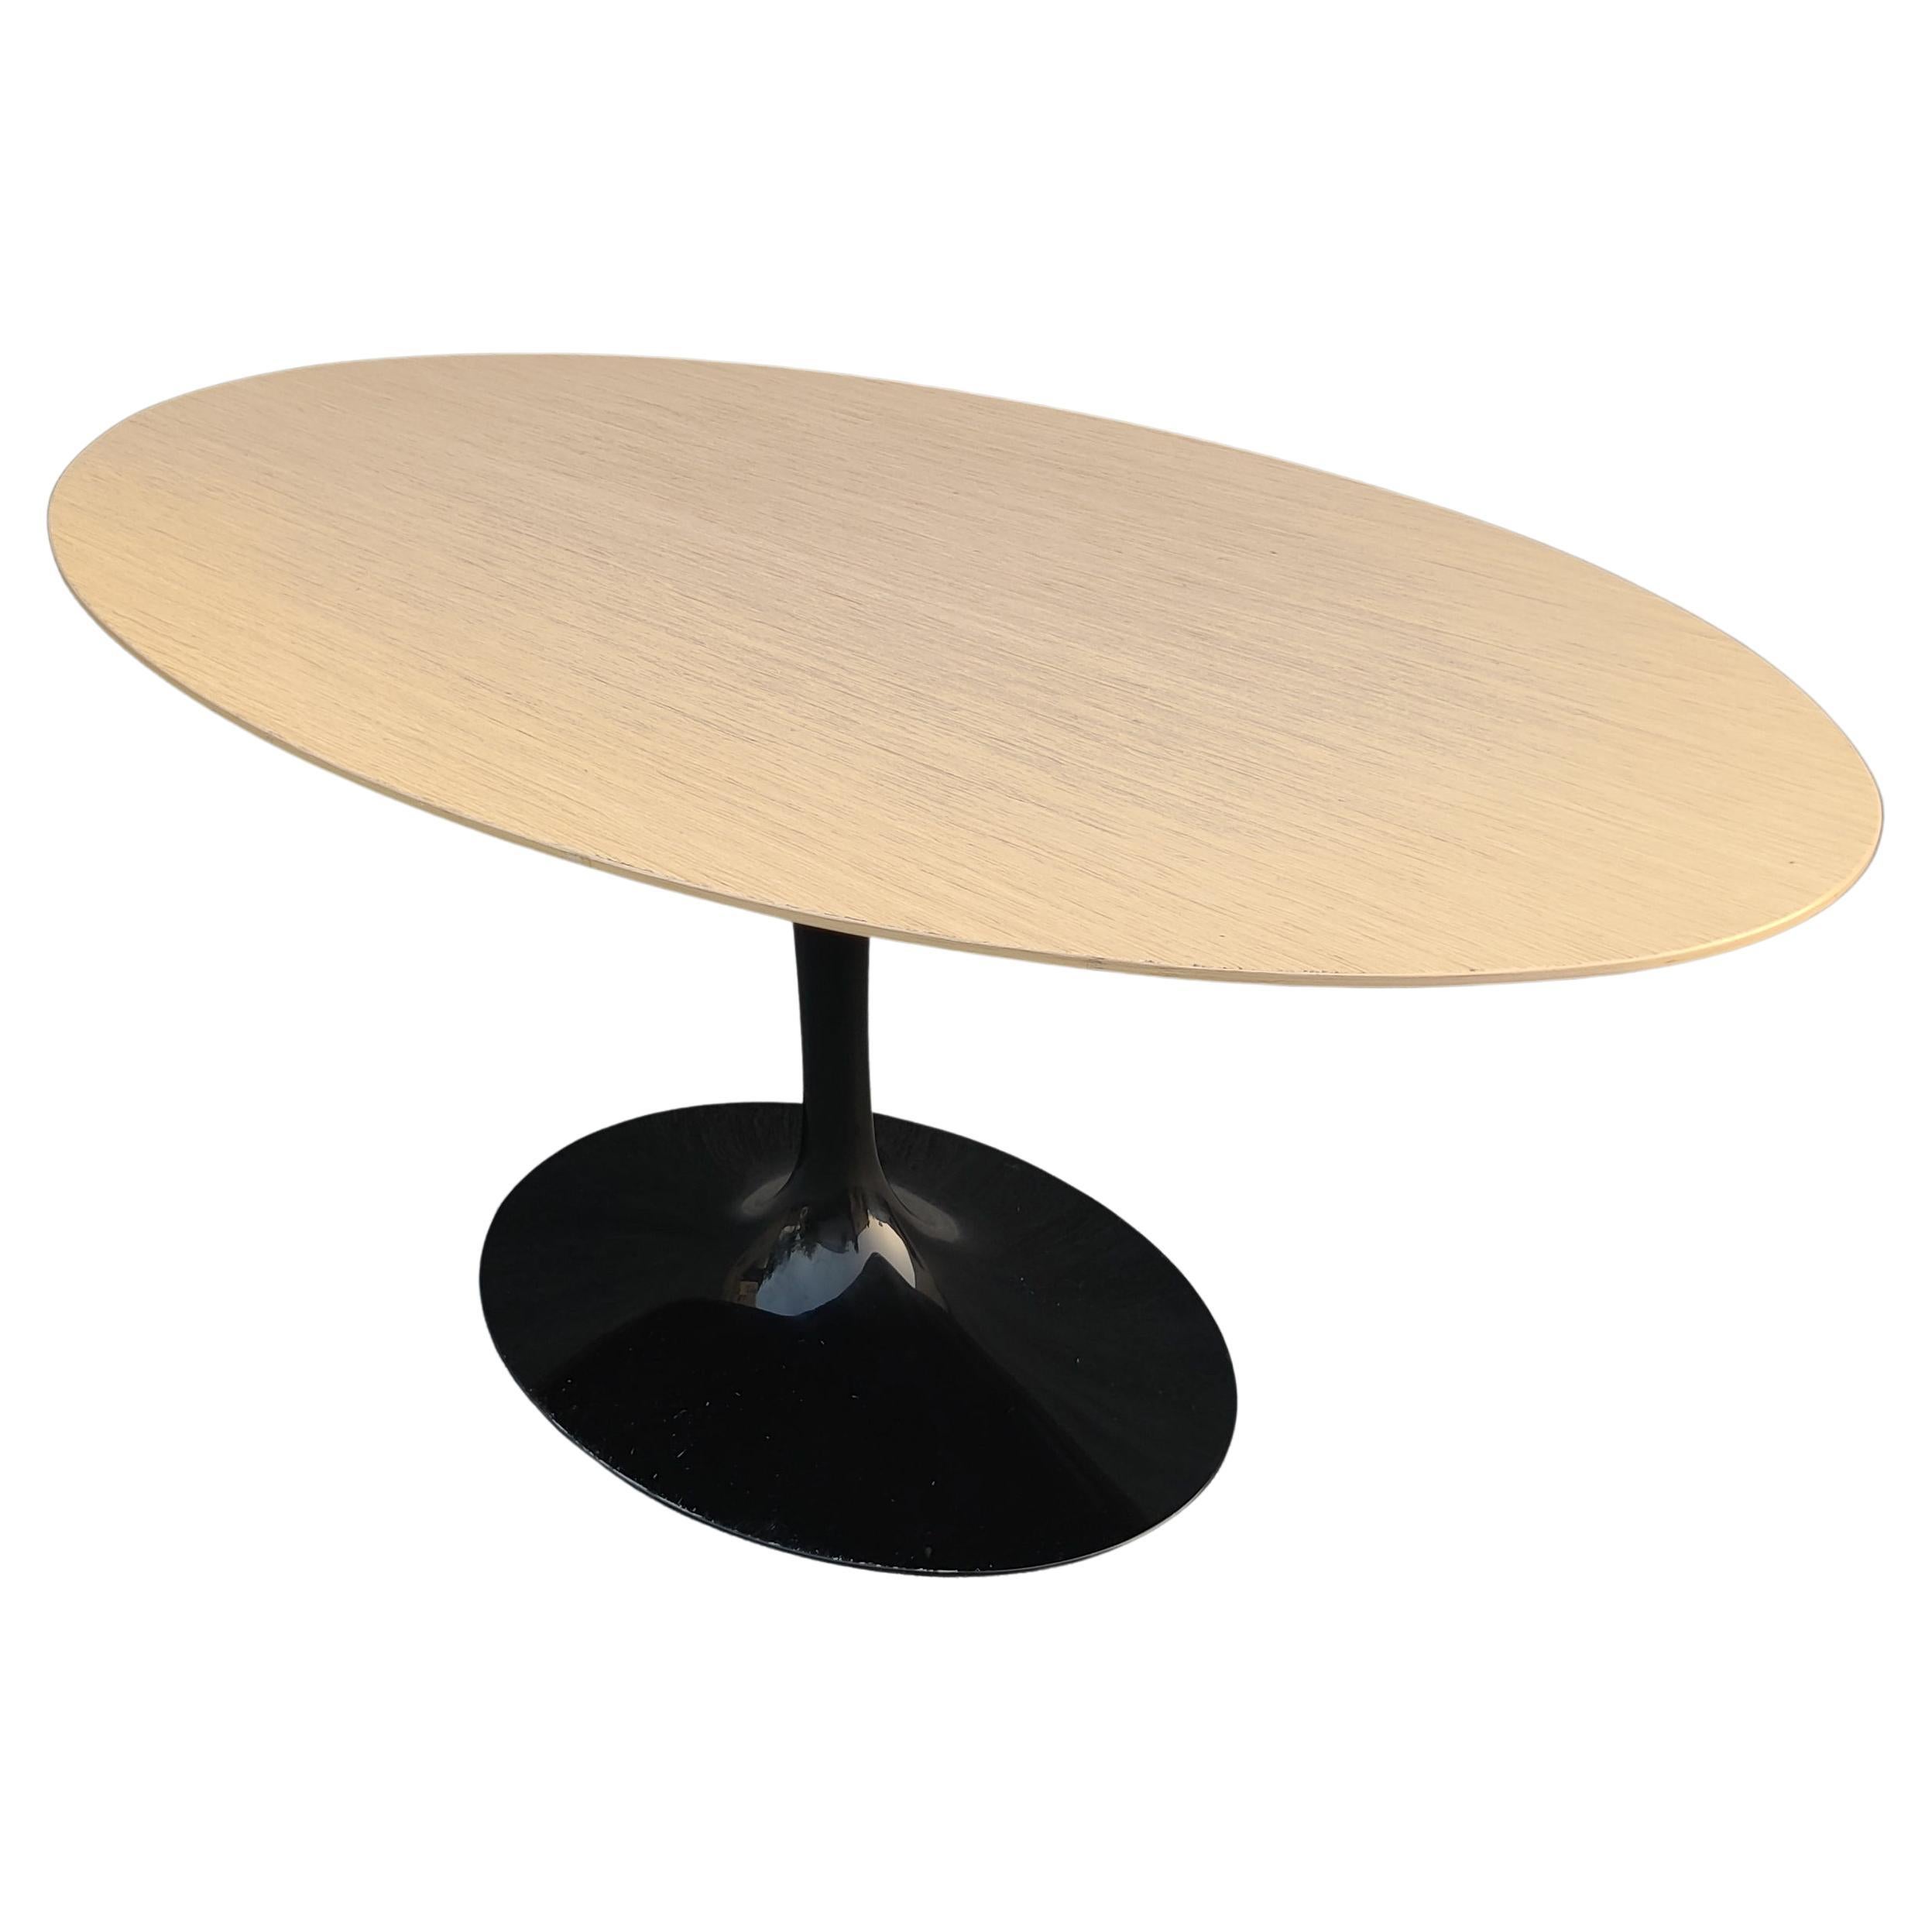 Eero Saarinen Knoll Oval Tulip Dining Table 66x38" Blond Wood Top Black Base For Sale